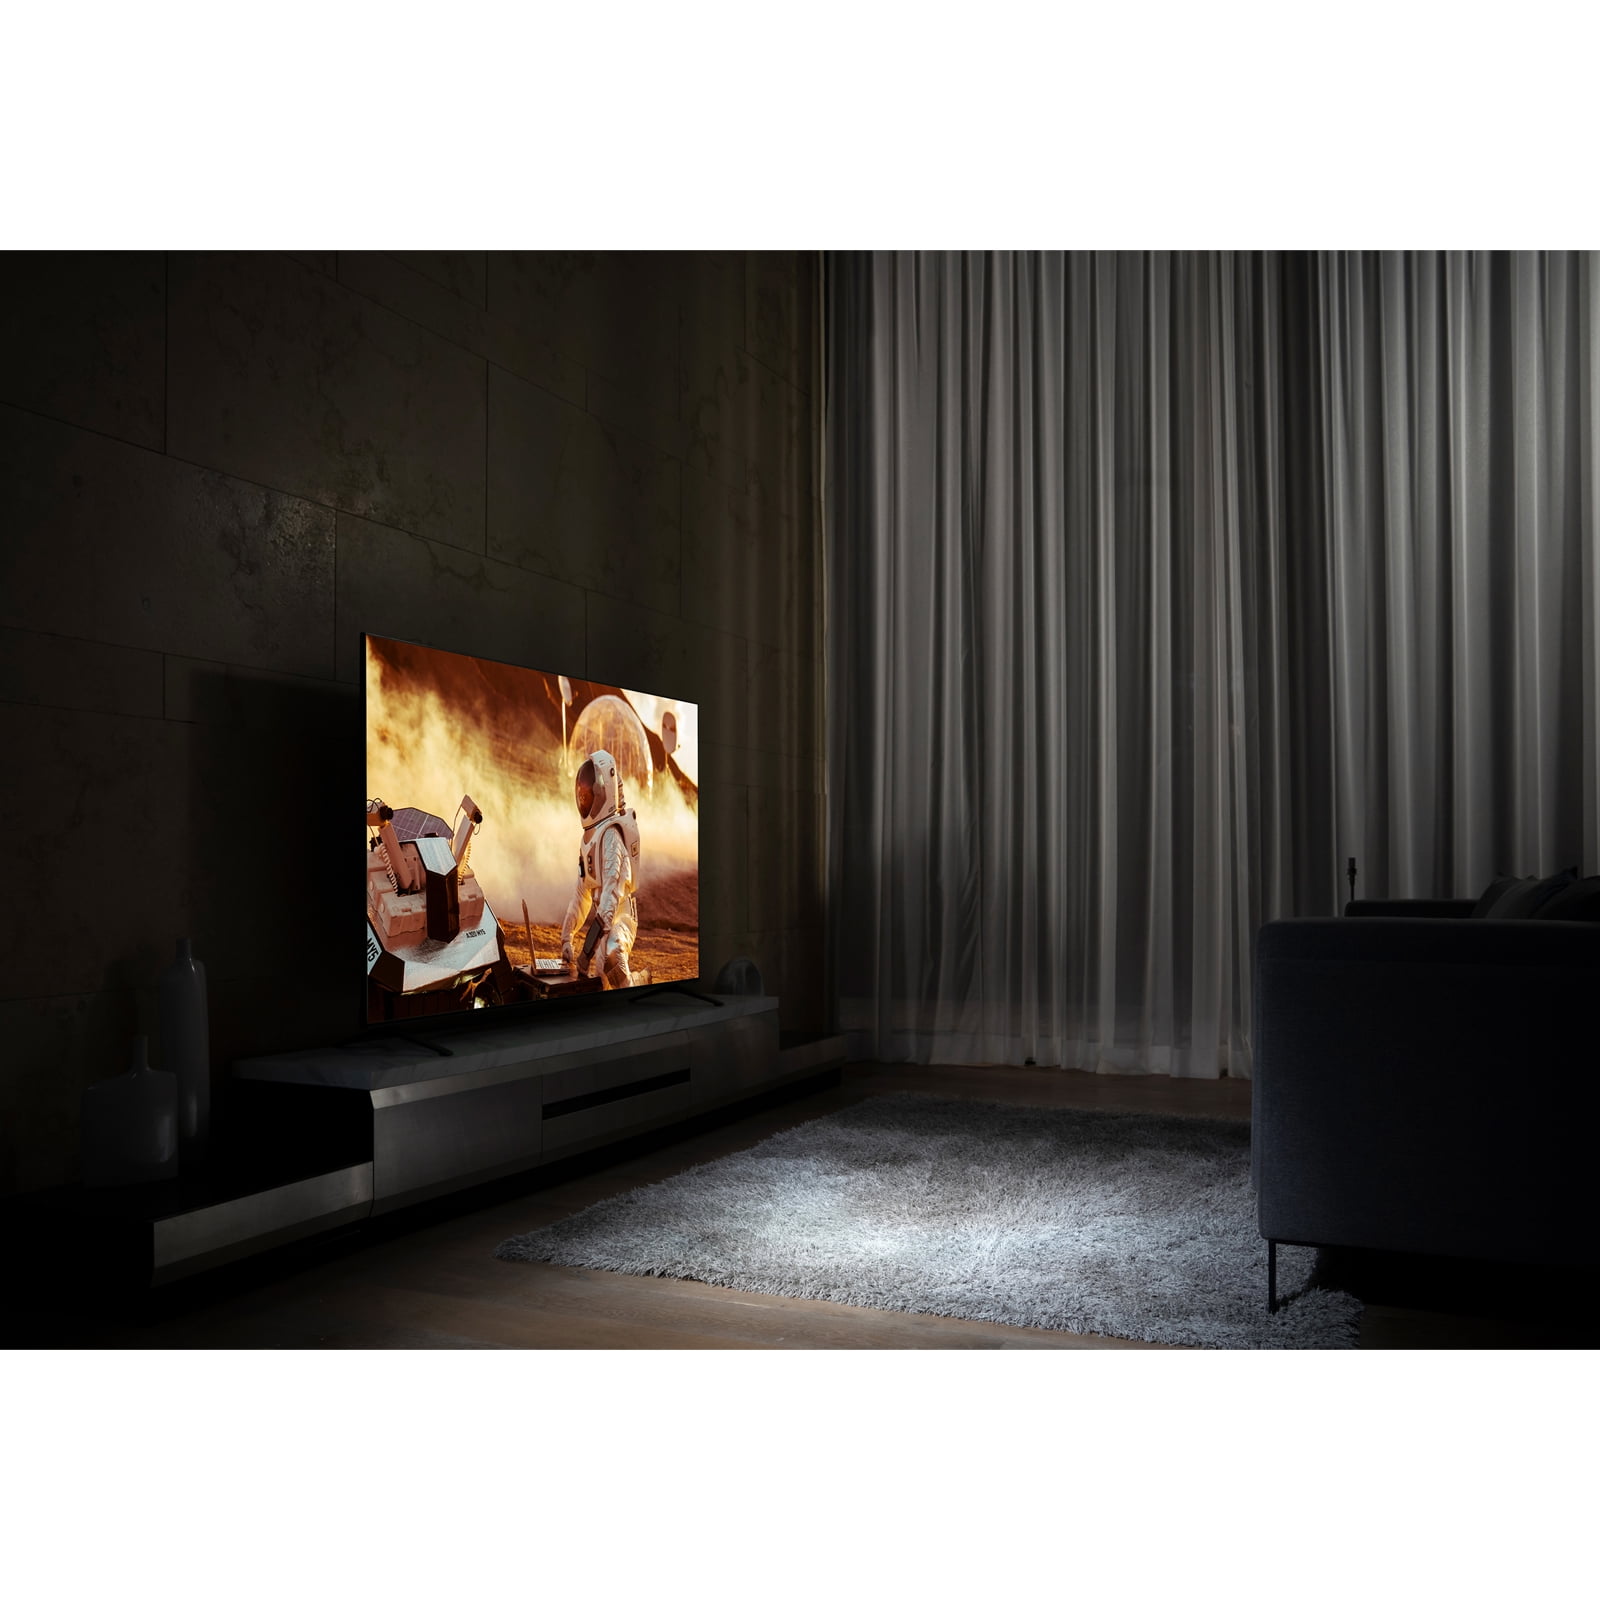 LG 43NANO75UPA 43 4K UHD Smart TV for sale online